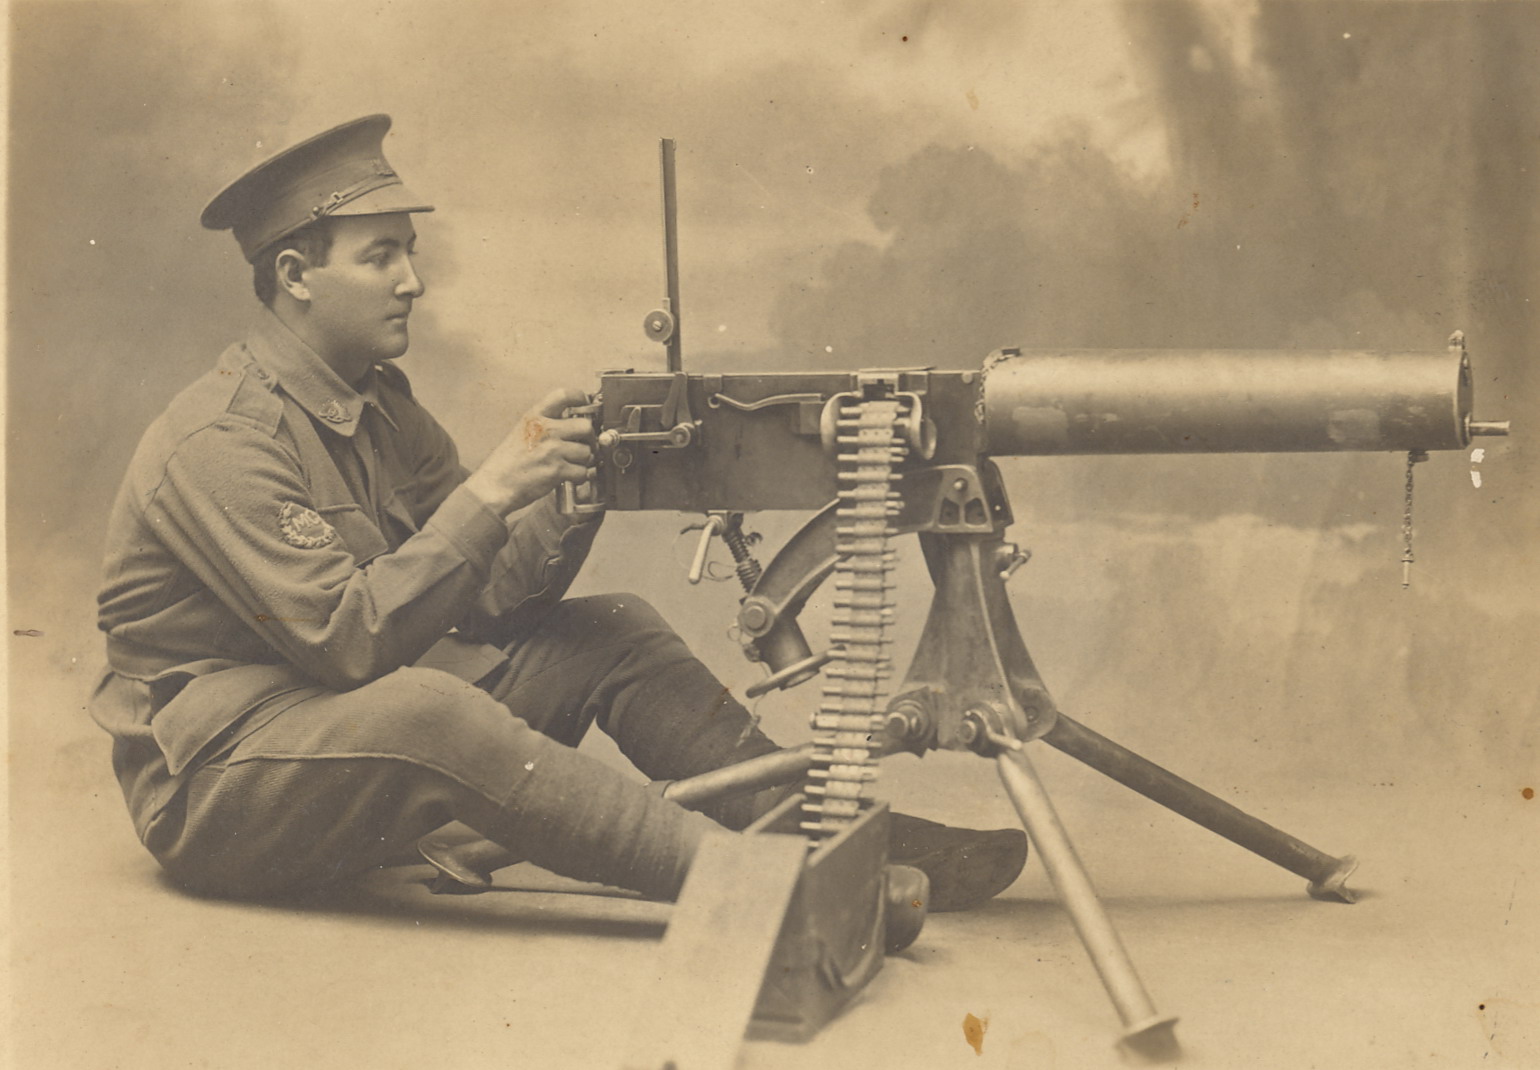 Eric William Bambrick, gunner, posing with machine gun before departing for the "Great" war